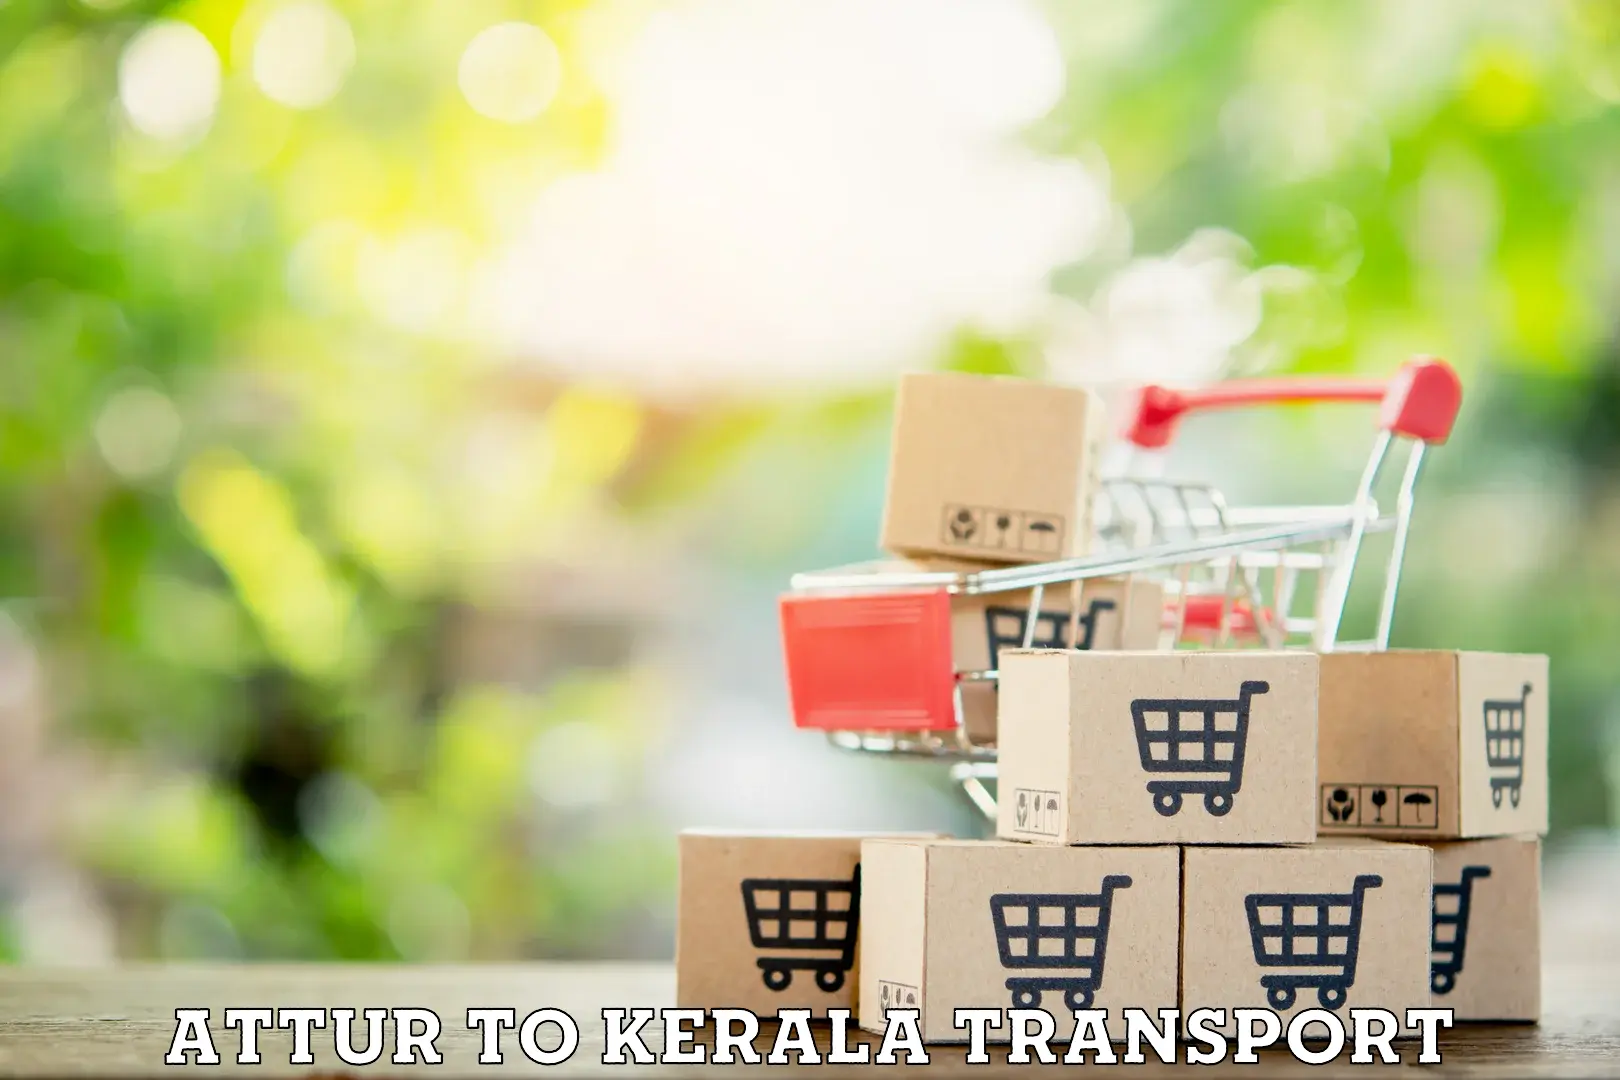 Online transport service Attur to Sreekandapuram